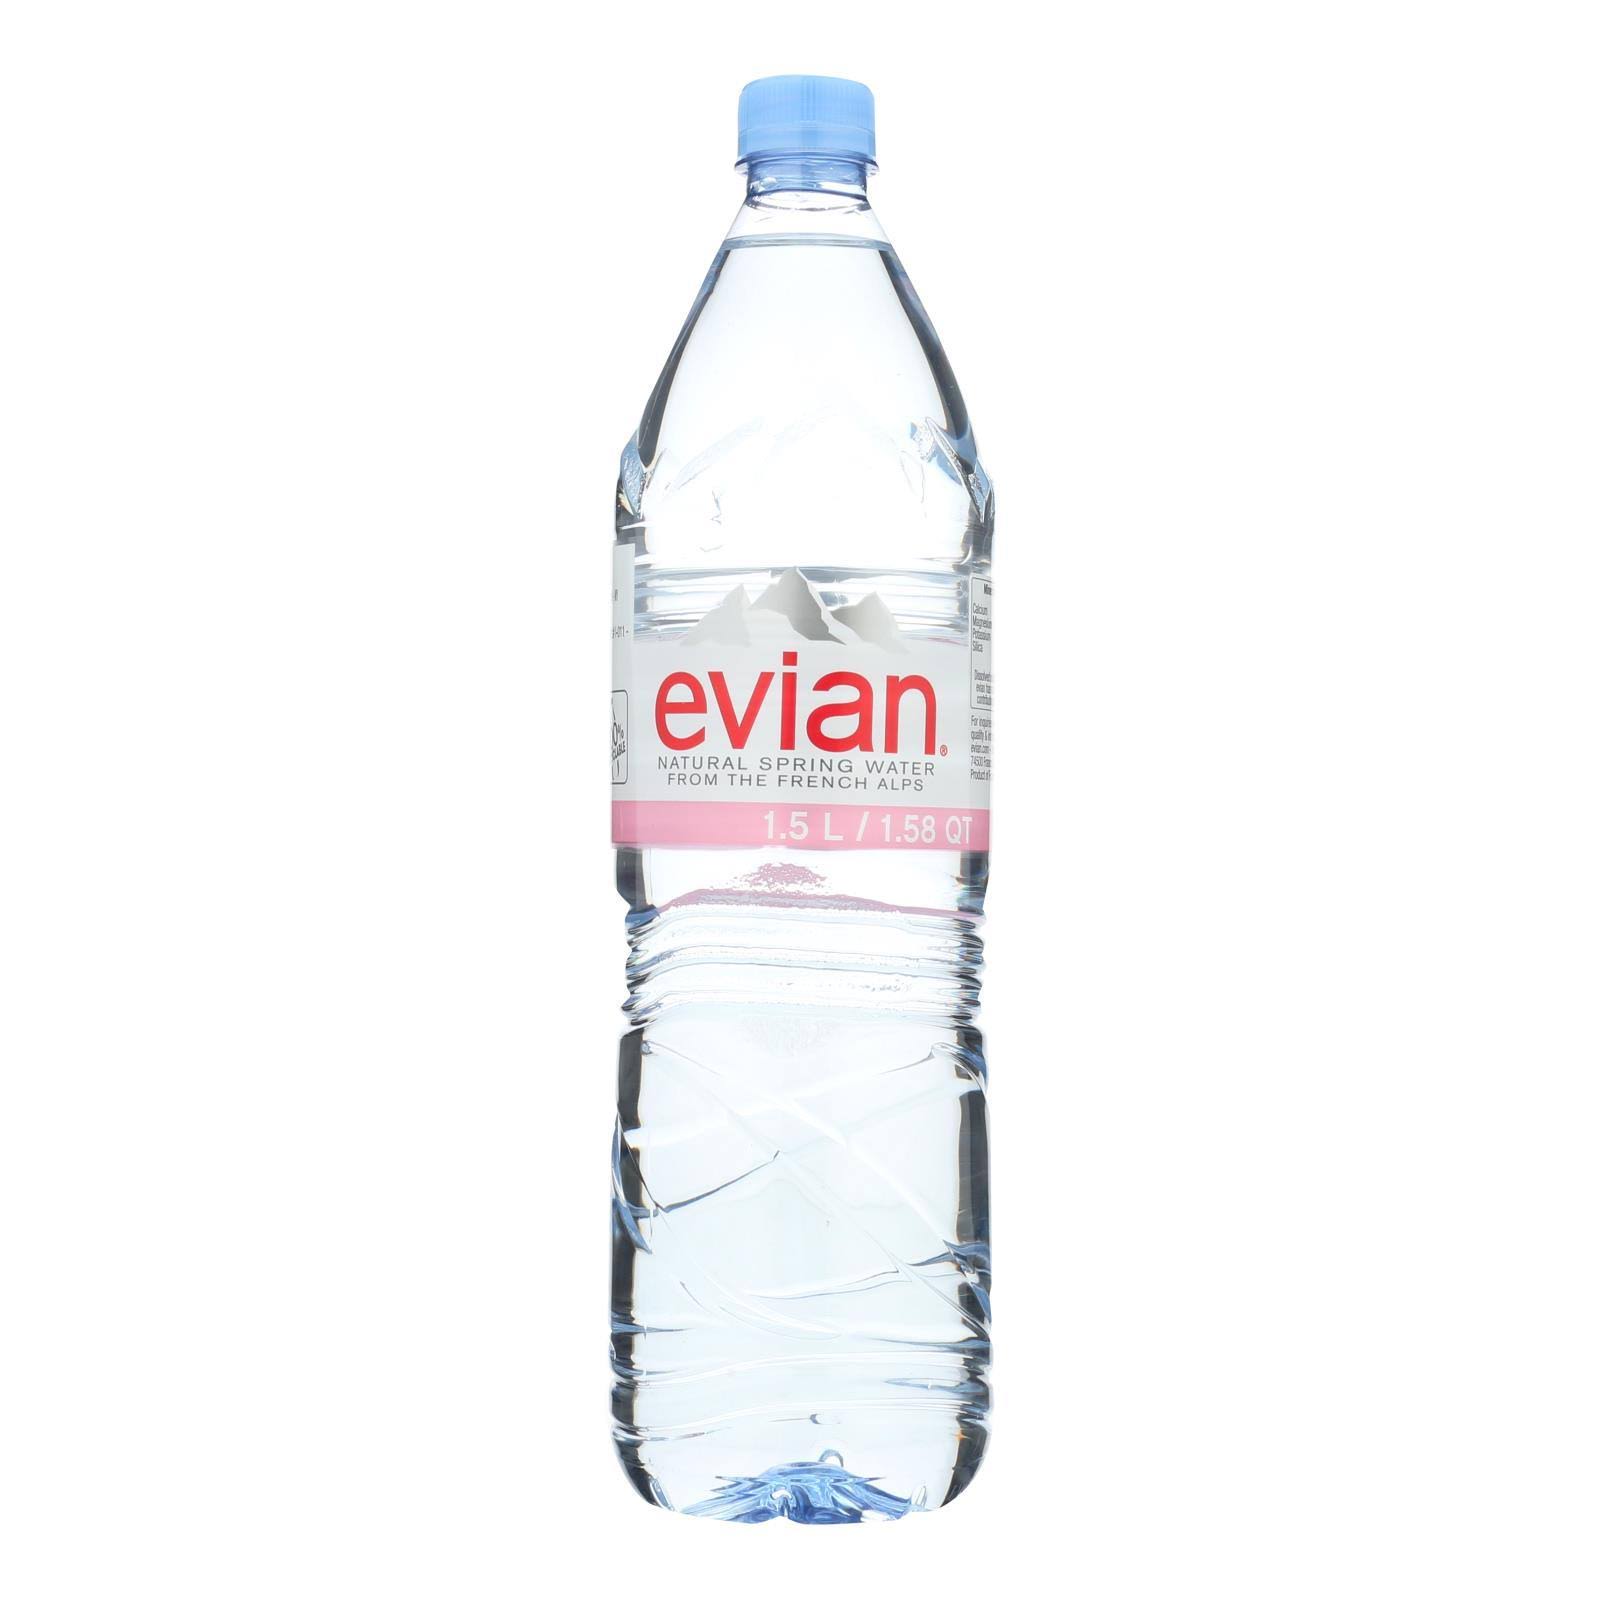 Evian Water, Natural Spring - 1.58 qt